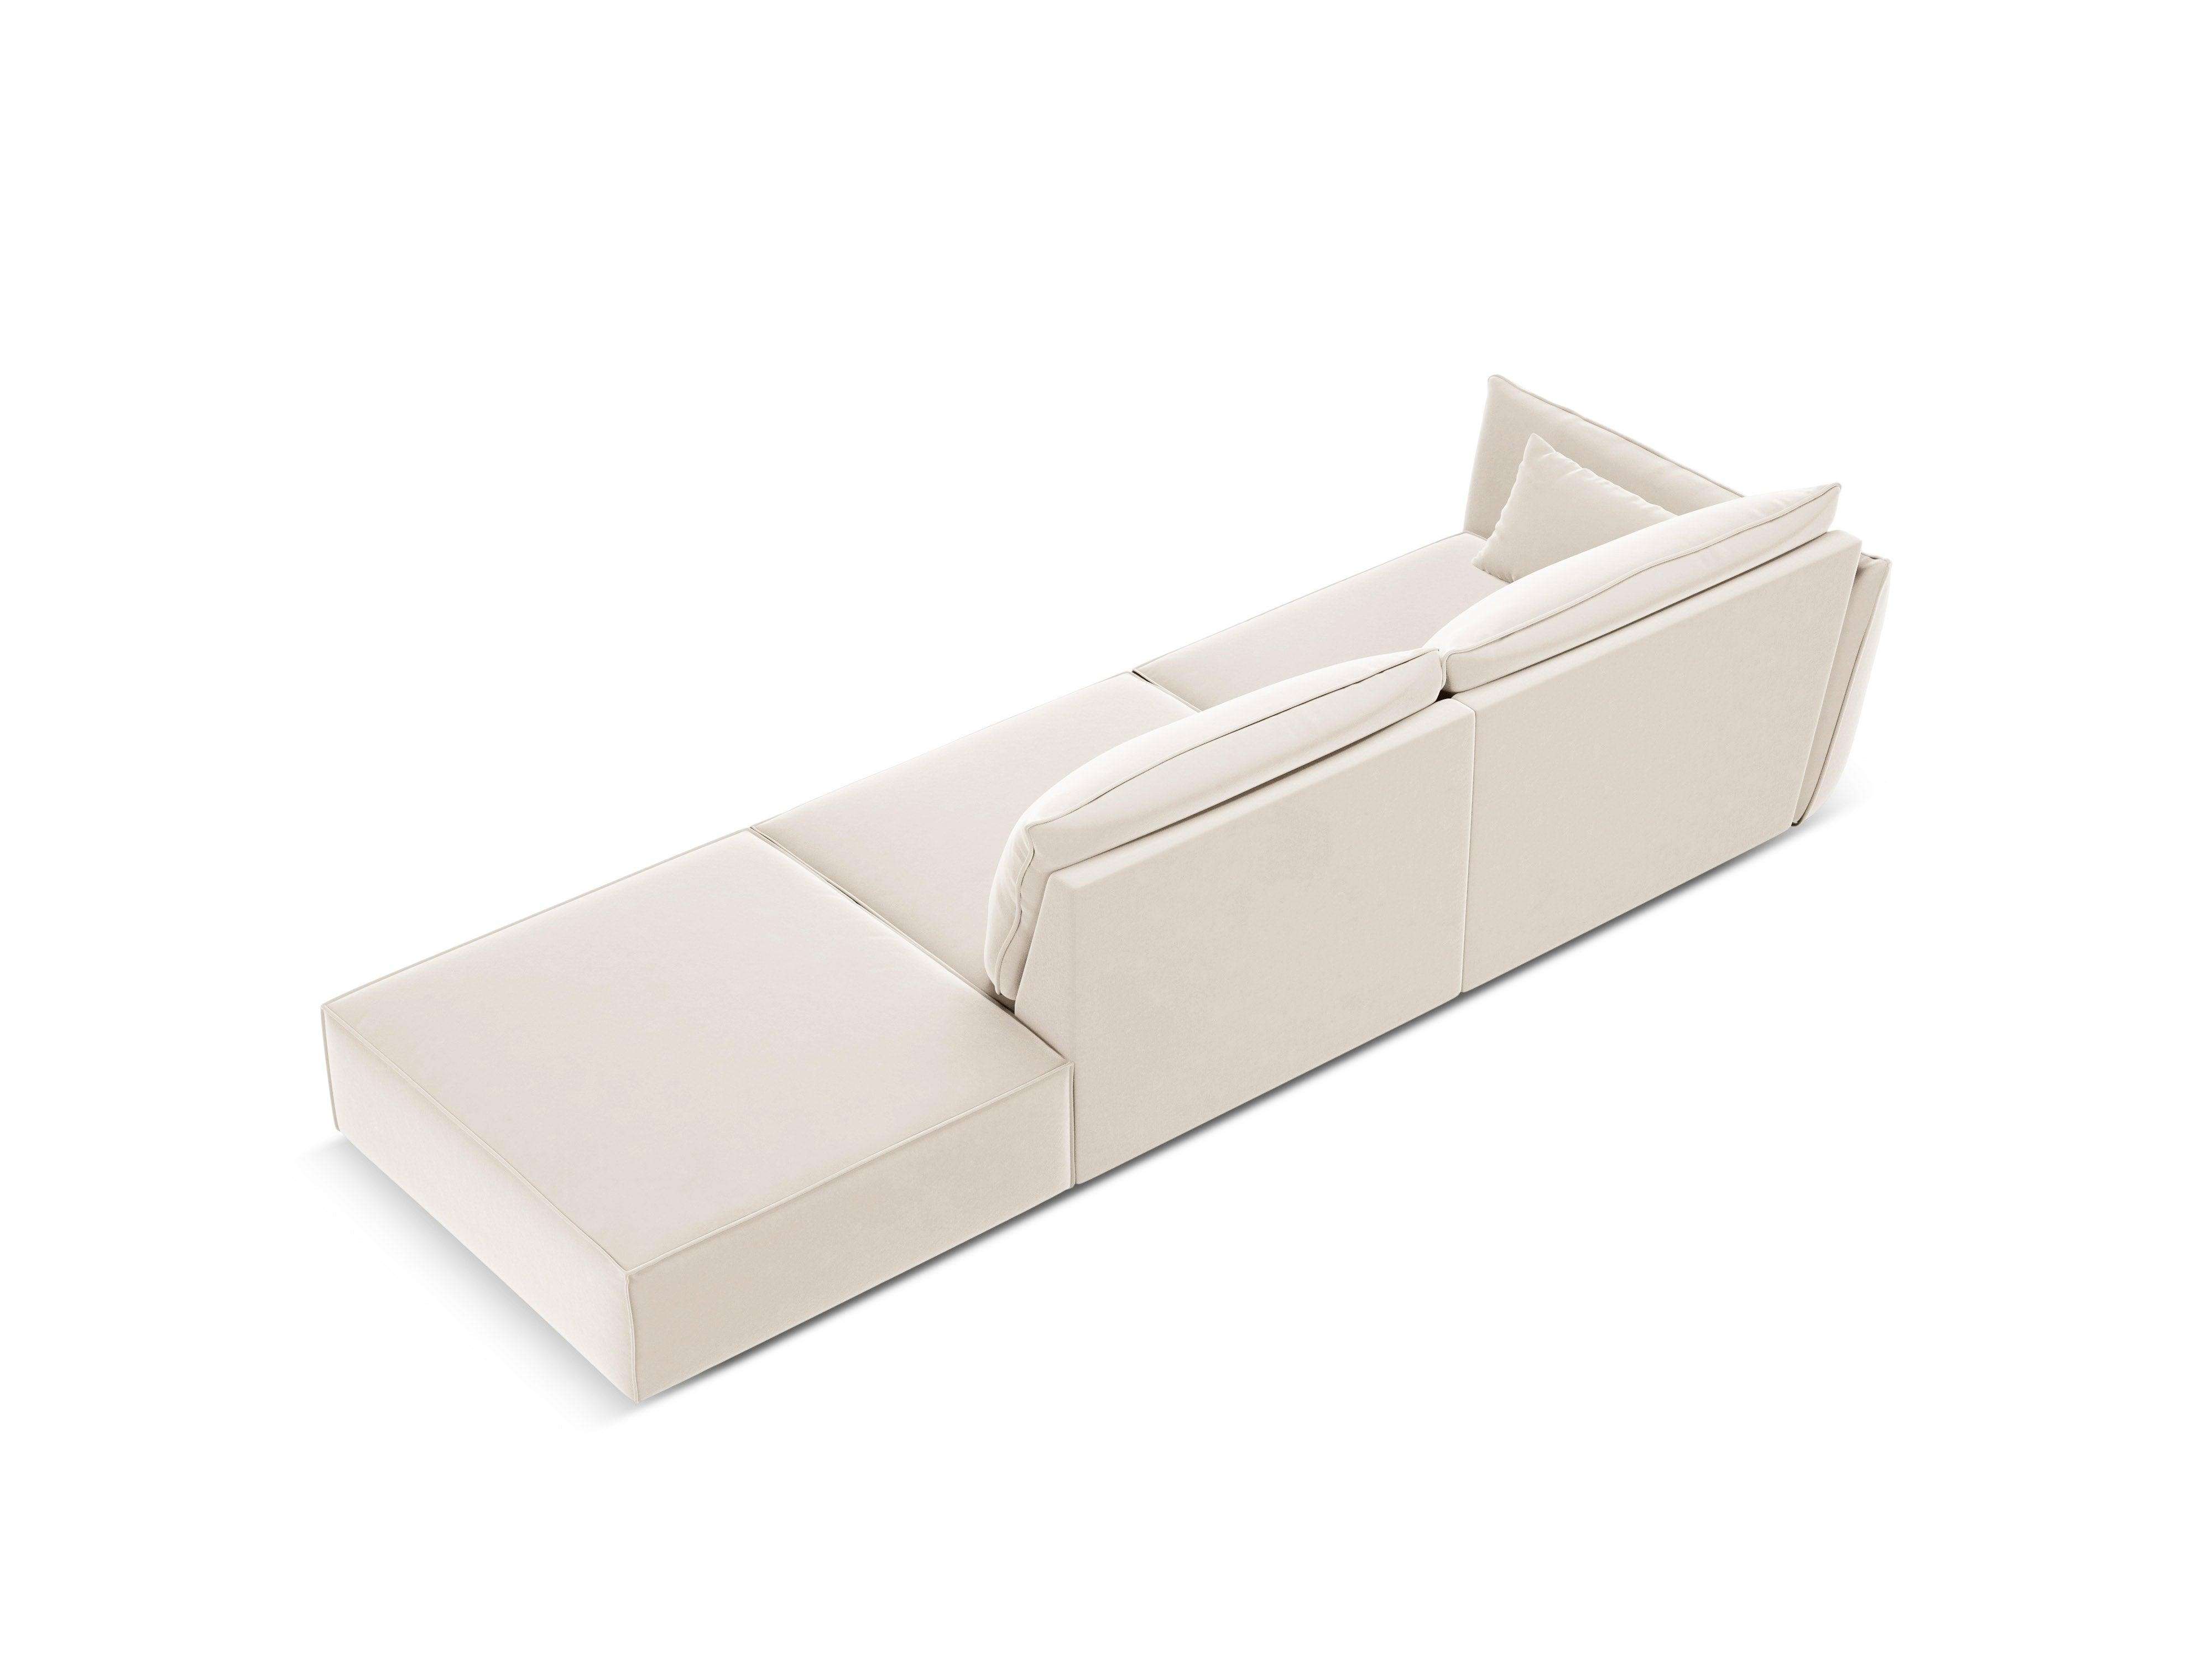 Right Velvet Sofa, "Vanda", 4 Seats, 286x100x85
Made in Europe, Mazzini Sofas, Eye on Design